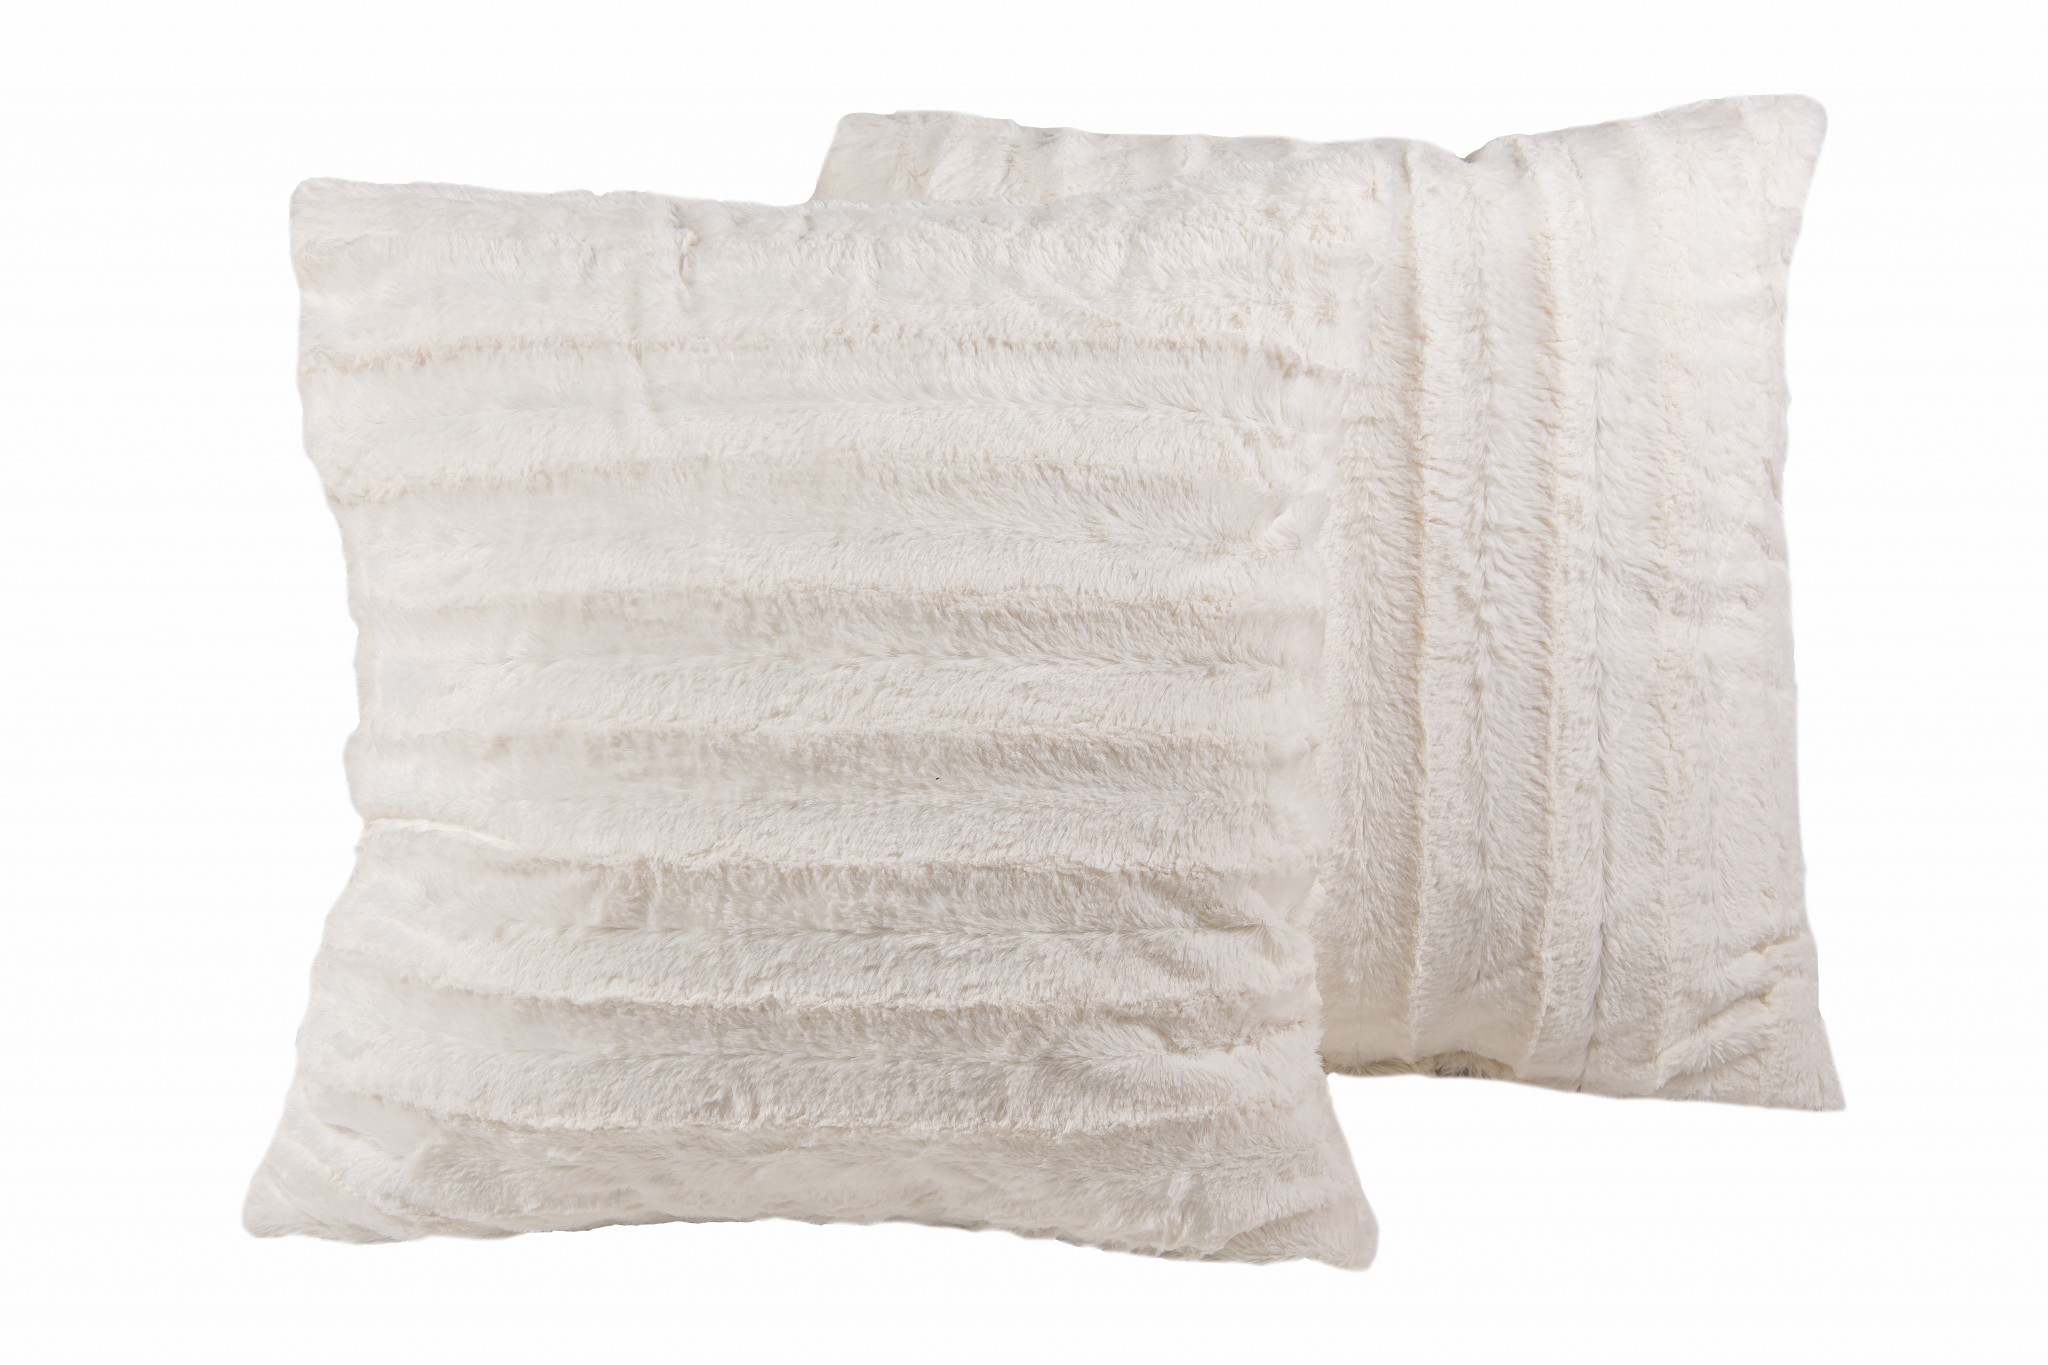 18" x 18" x 5" Off White Faux Fur Pillow 2-Pack